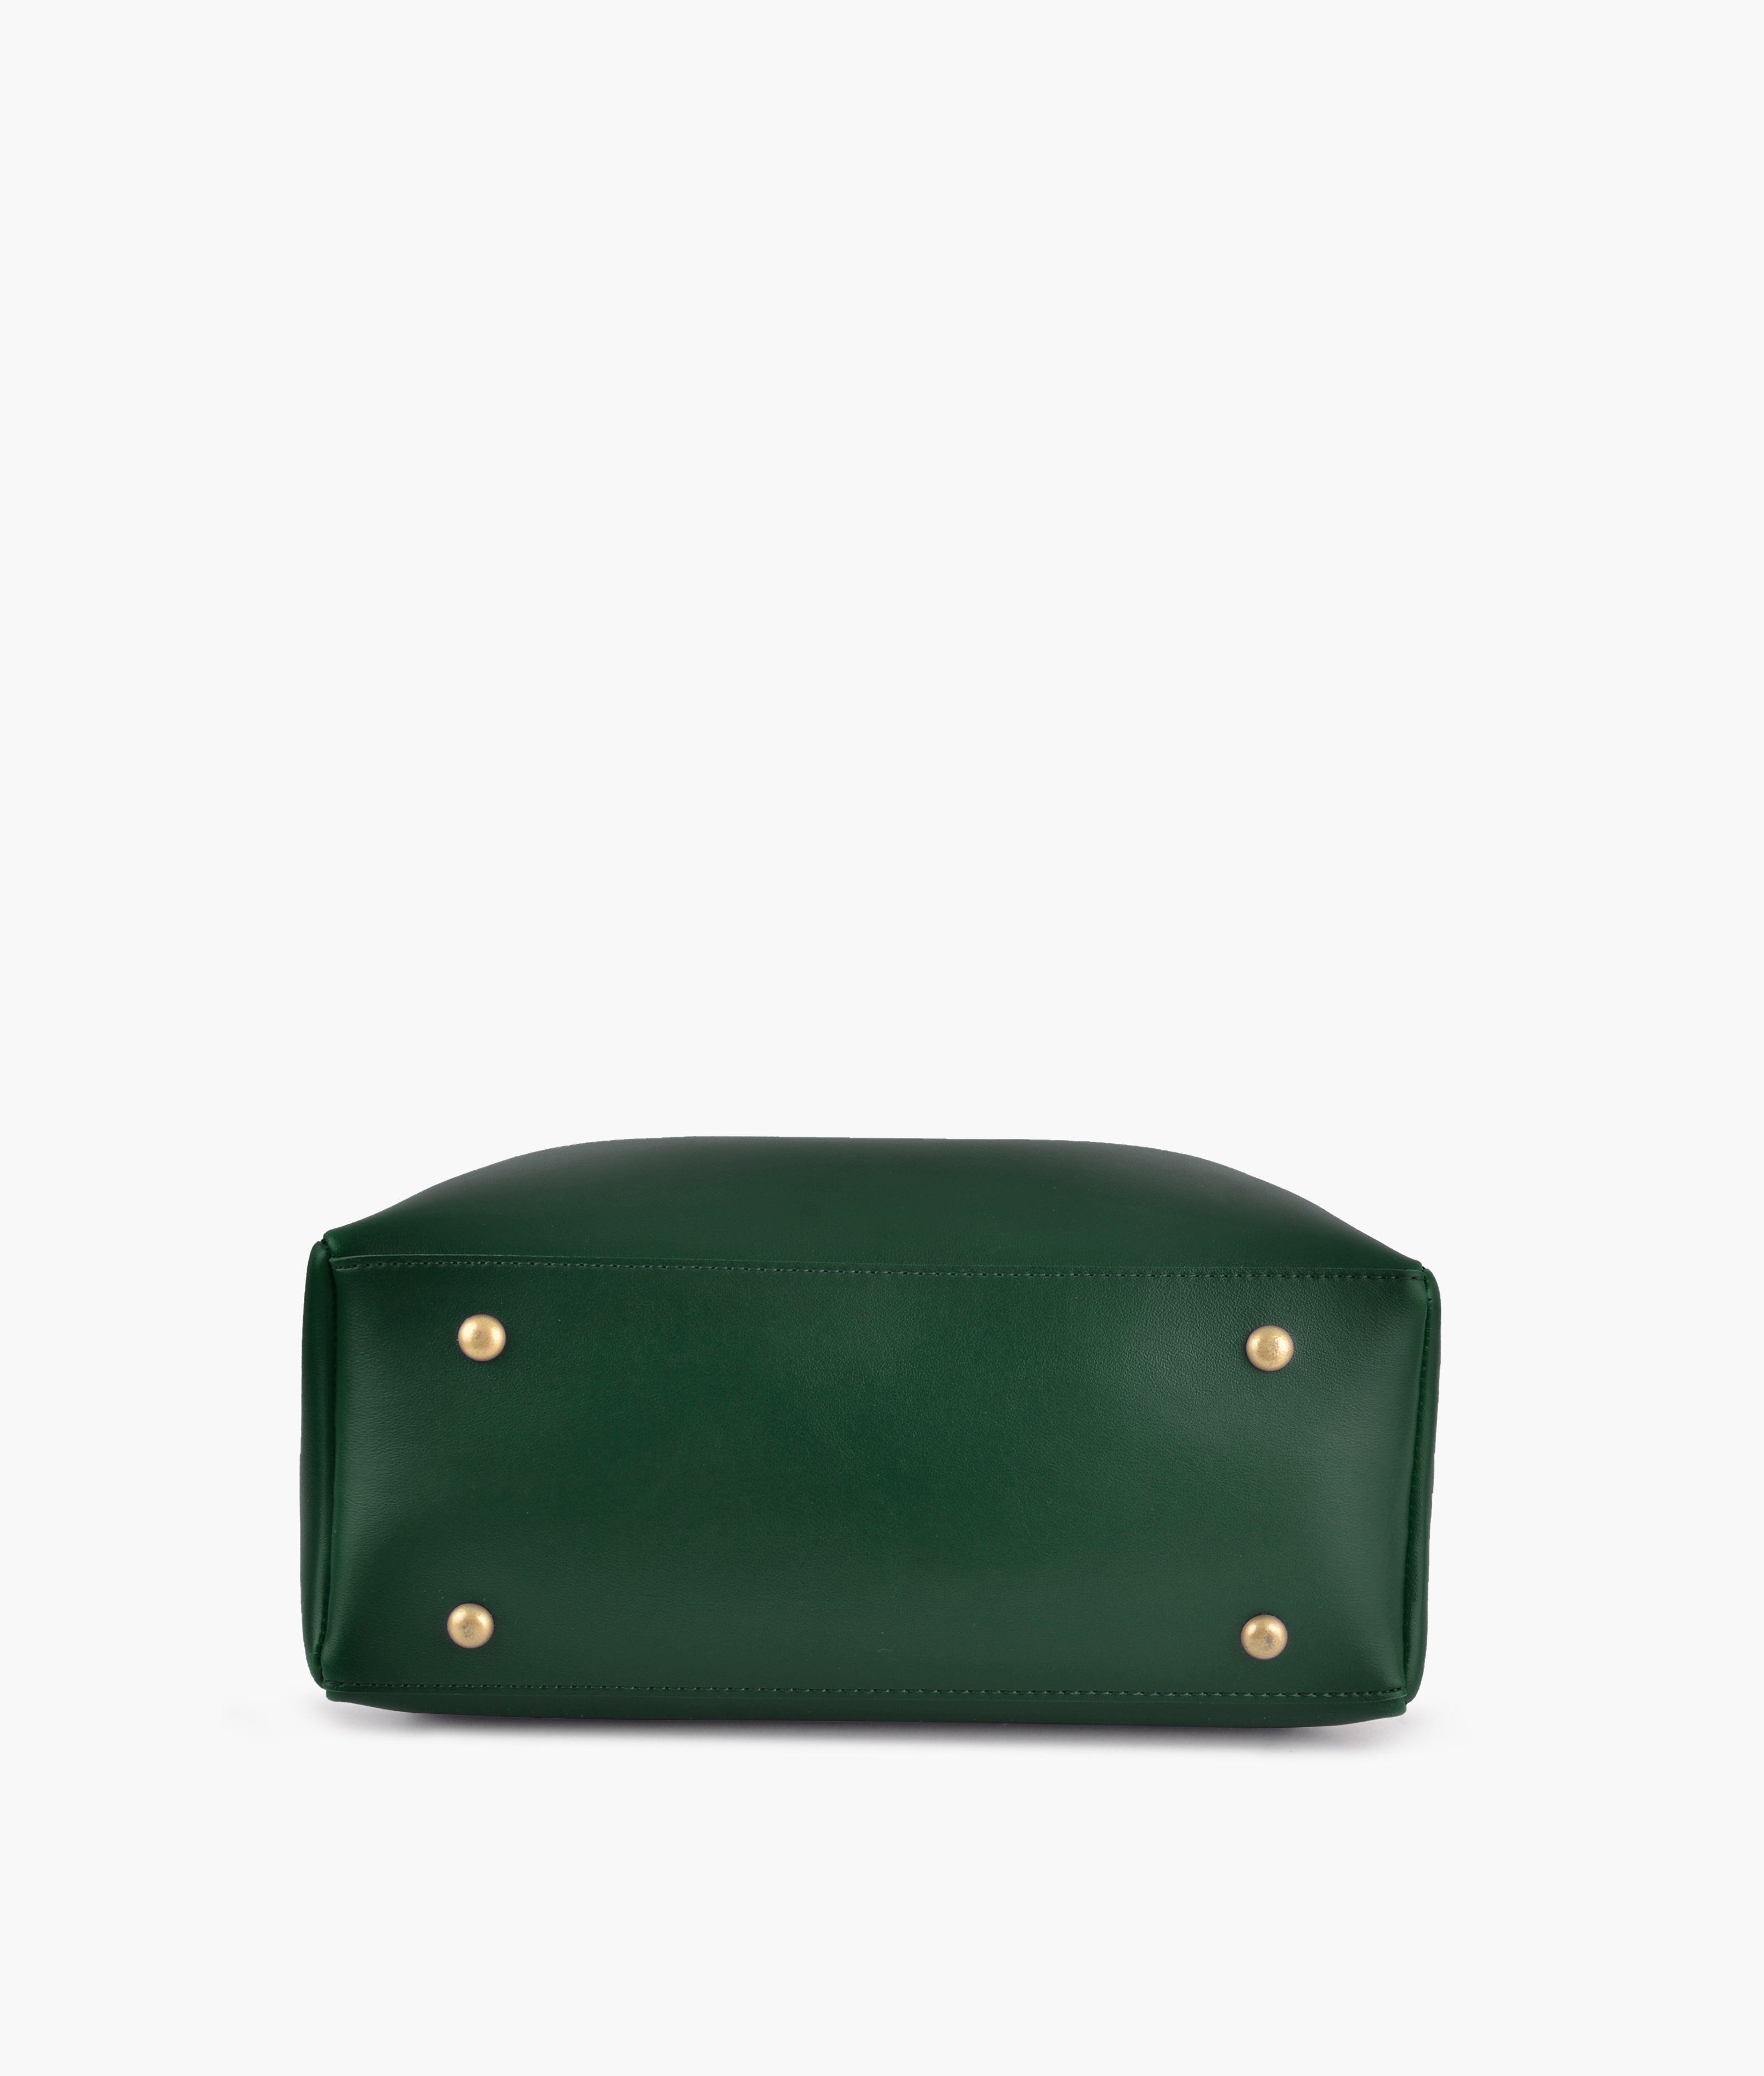 Army green mini bag